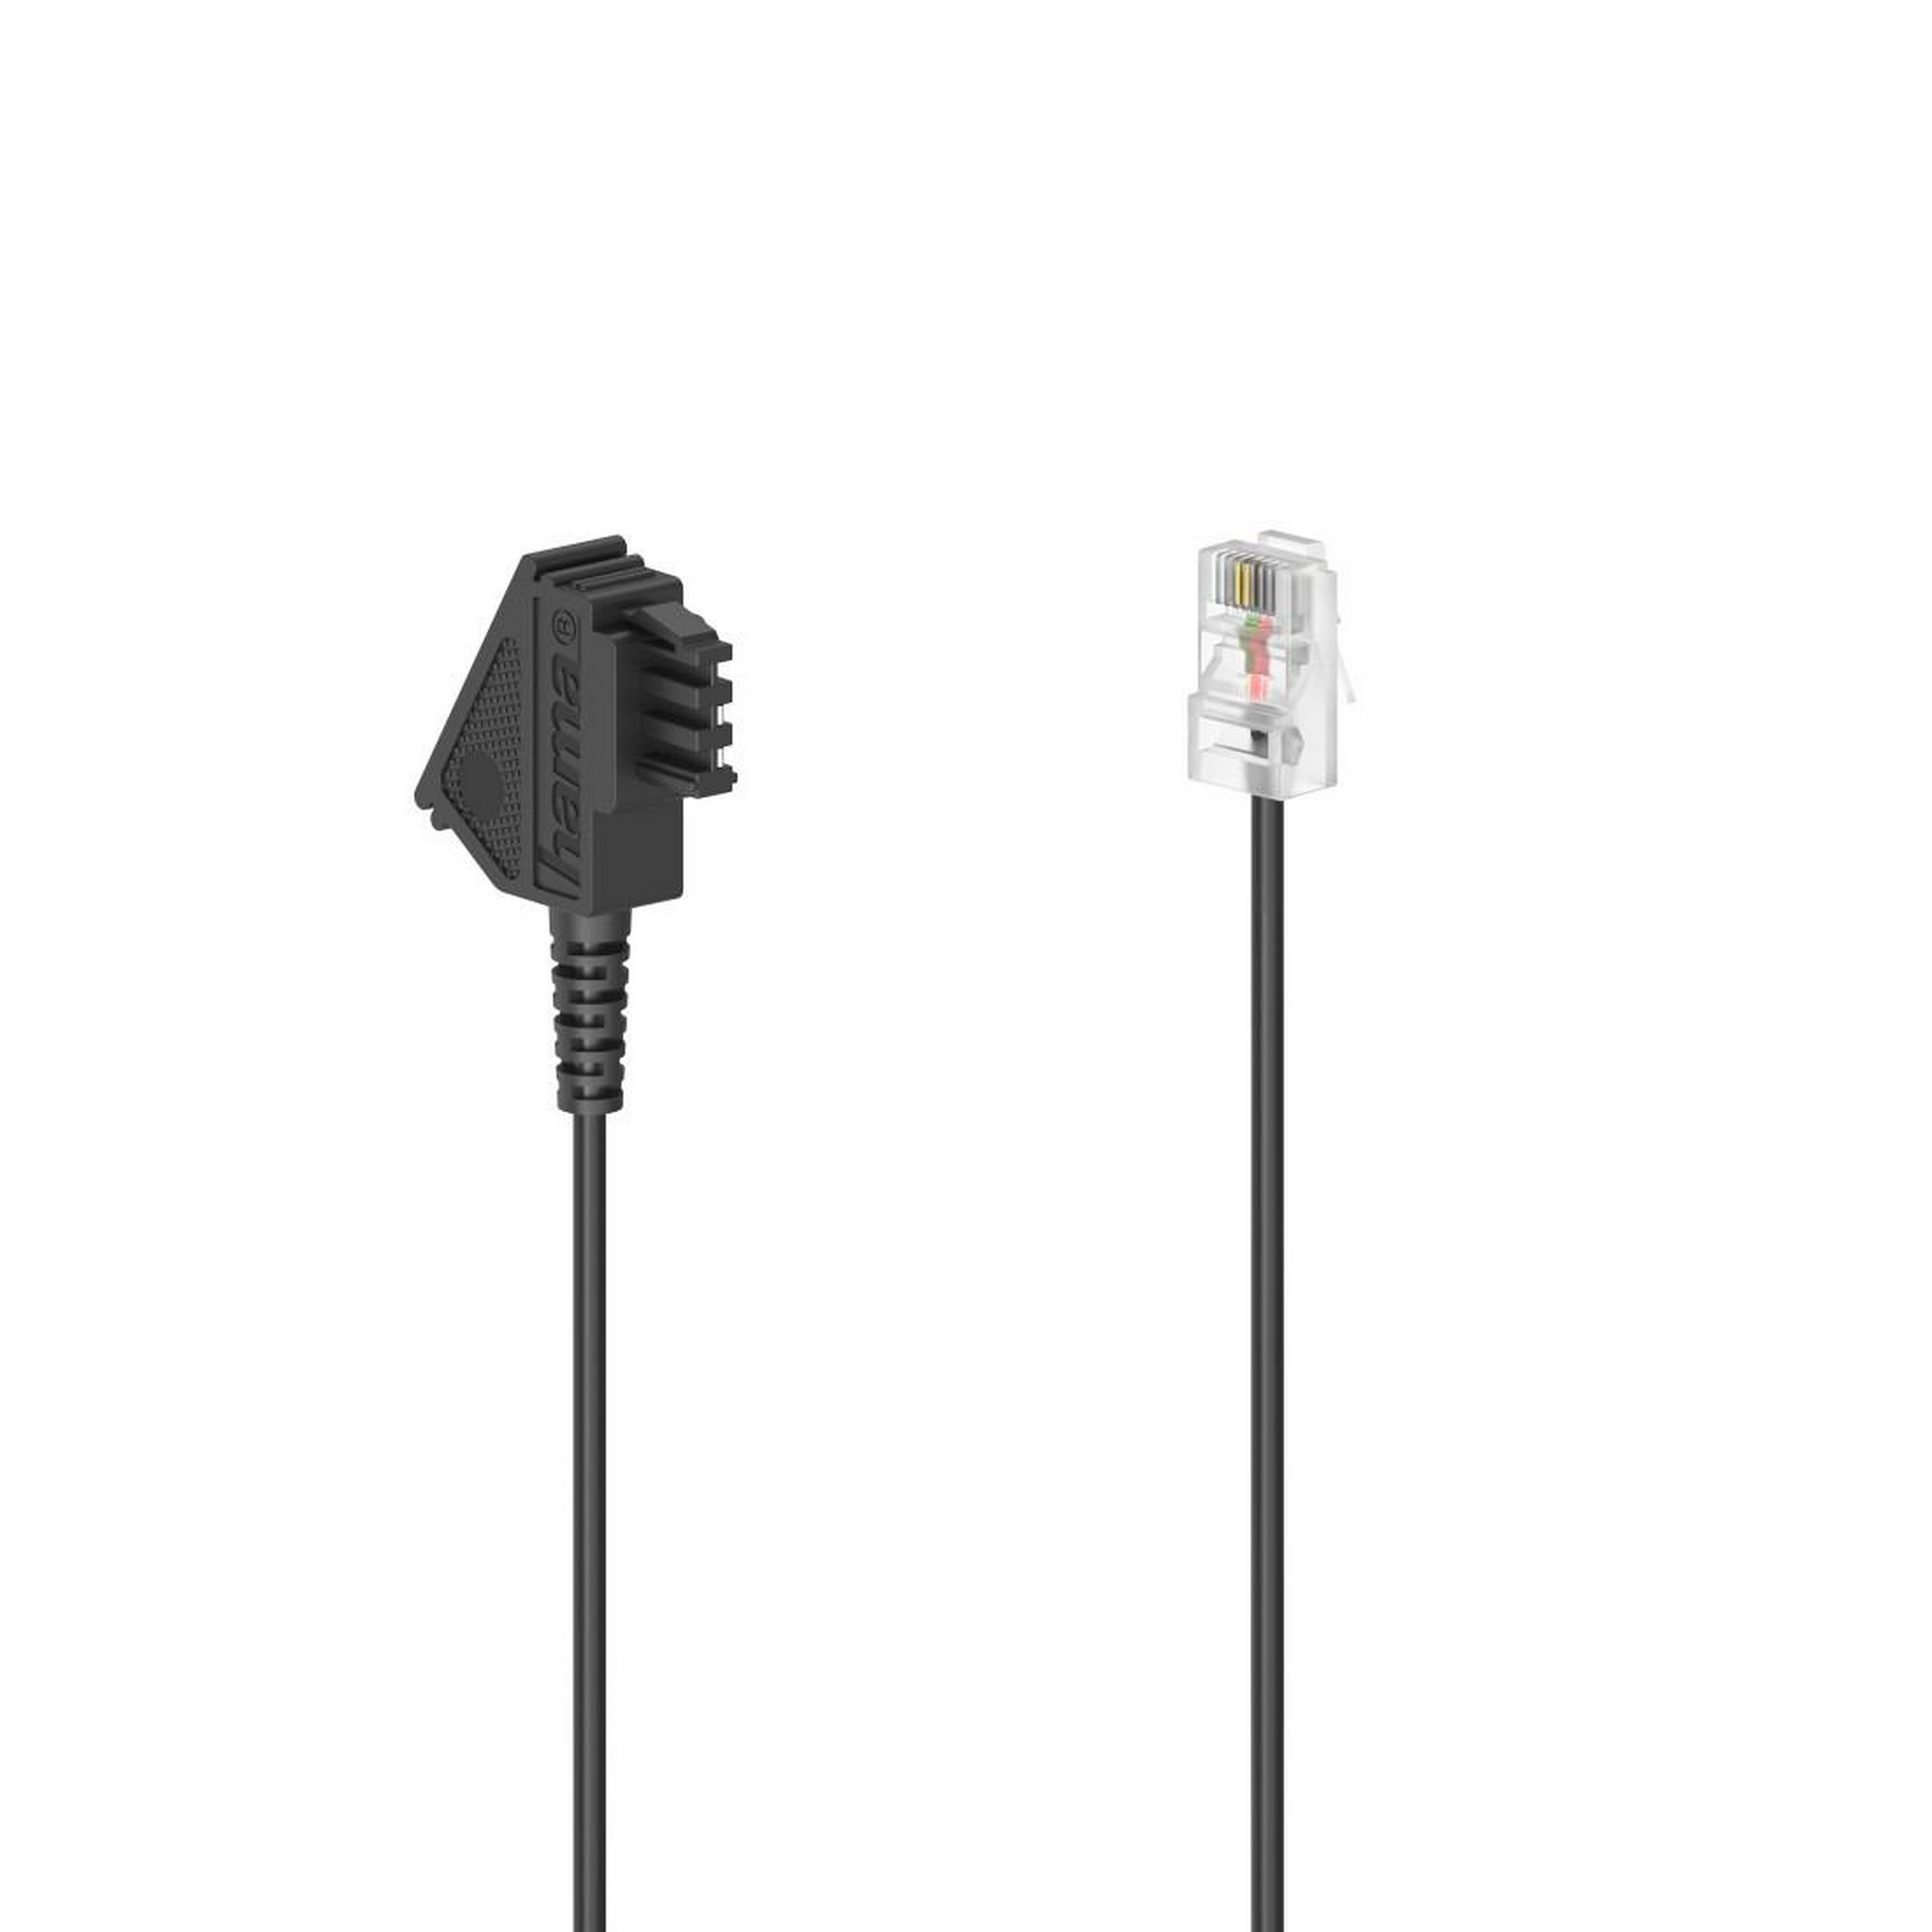 DSL-Box-Kabel schwarz TAE-F-Stecker mit Modular-Stecker 8p2c, 3 m + product picture